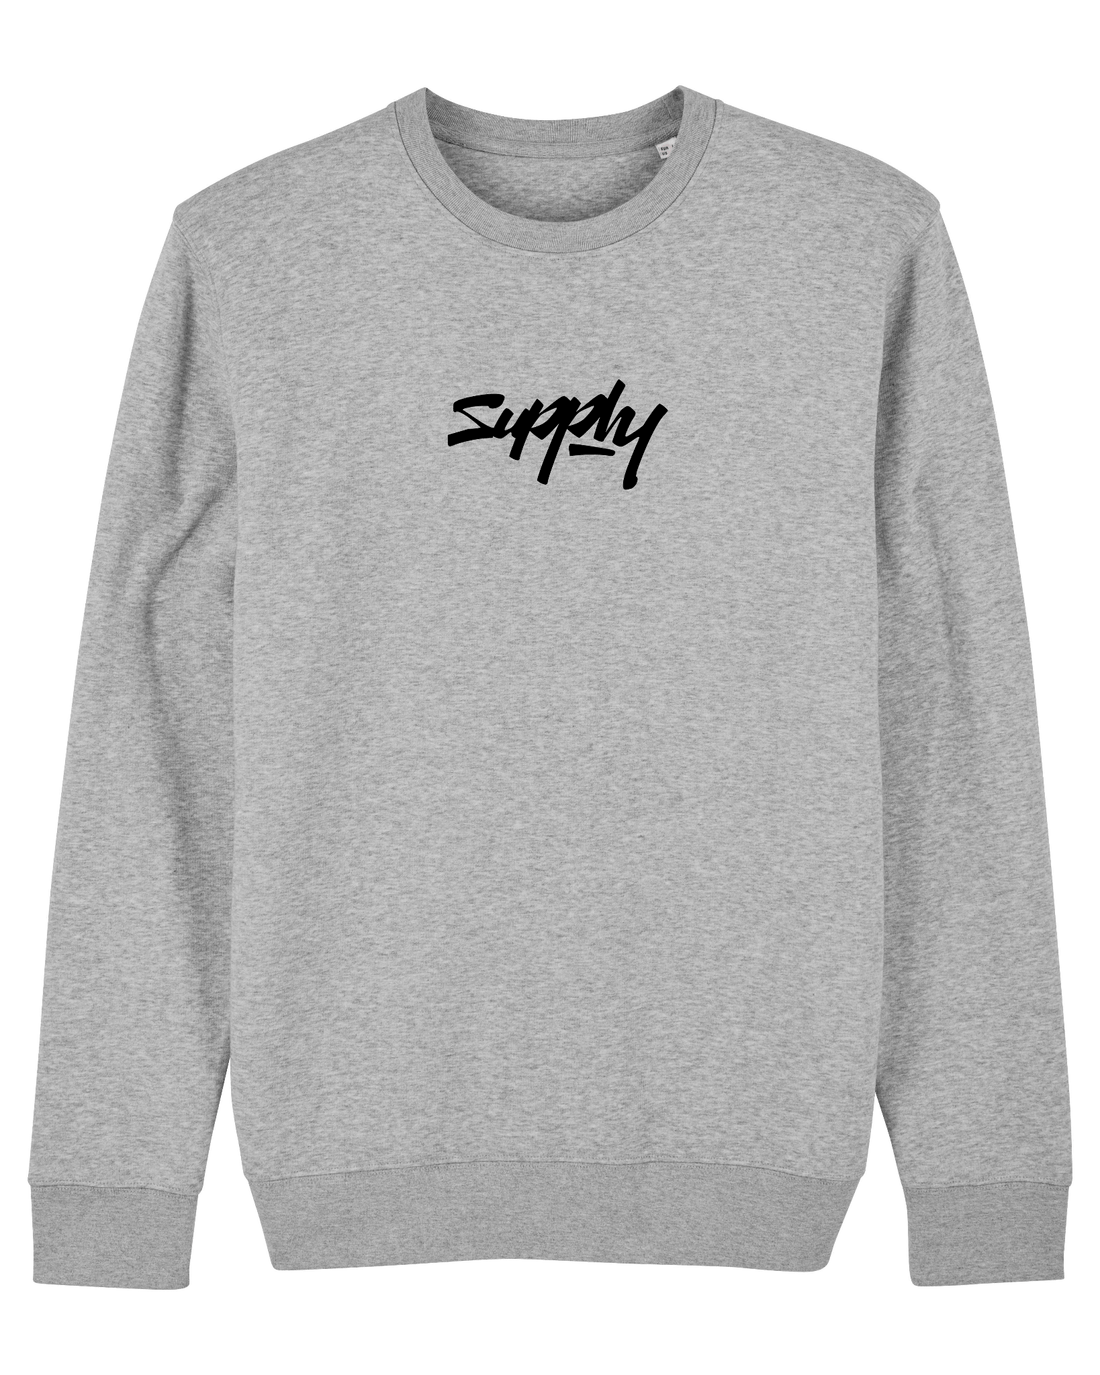 Grey Skater Sweatshirt, Supply Front Print